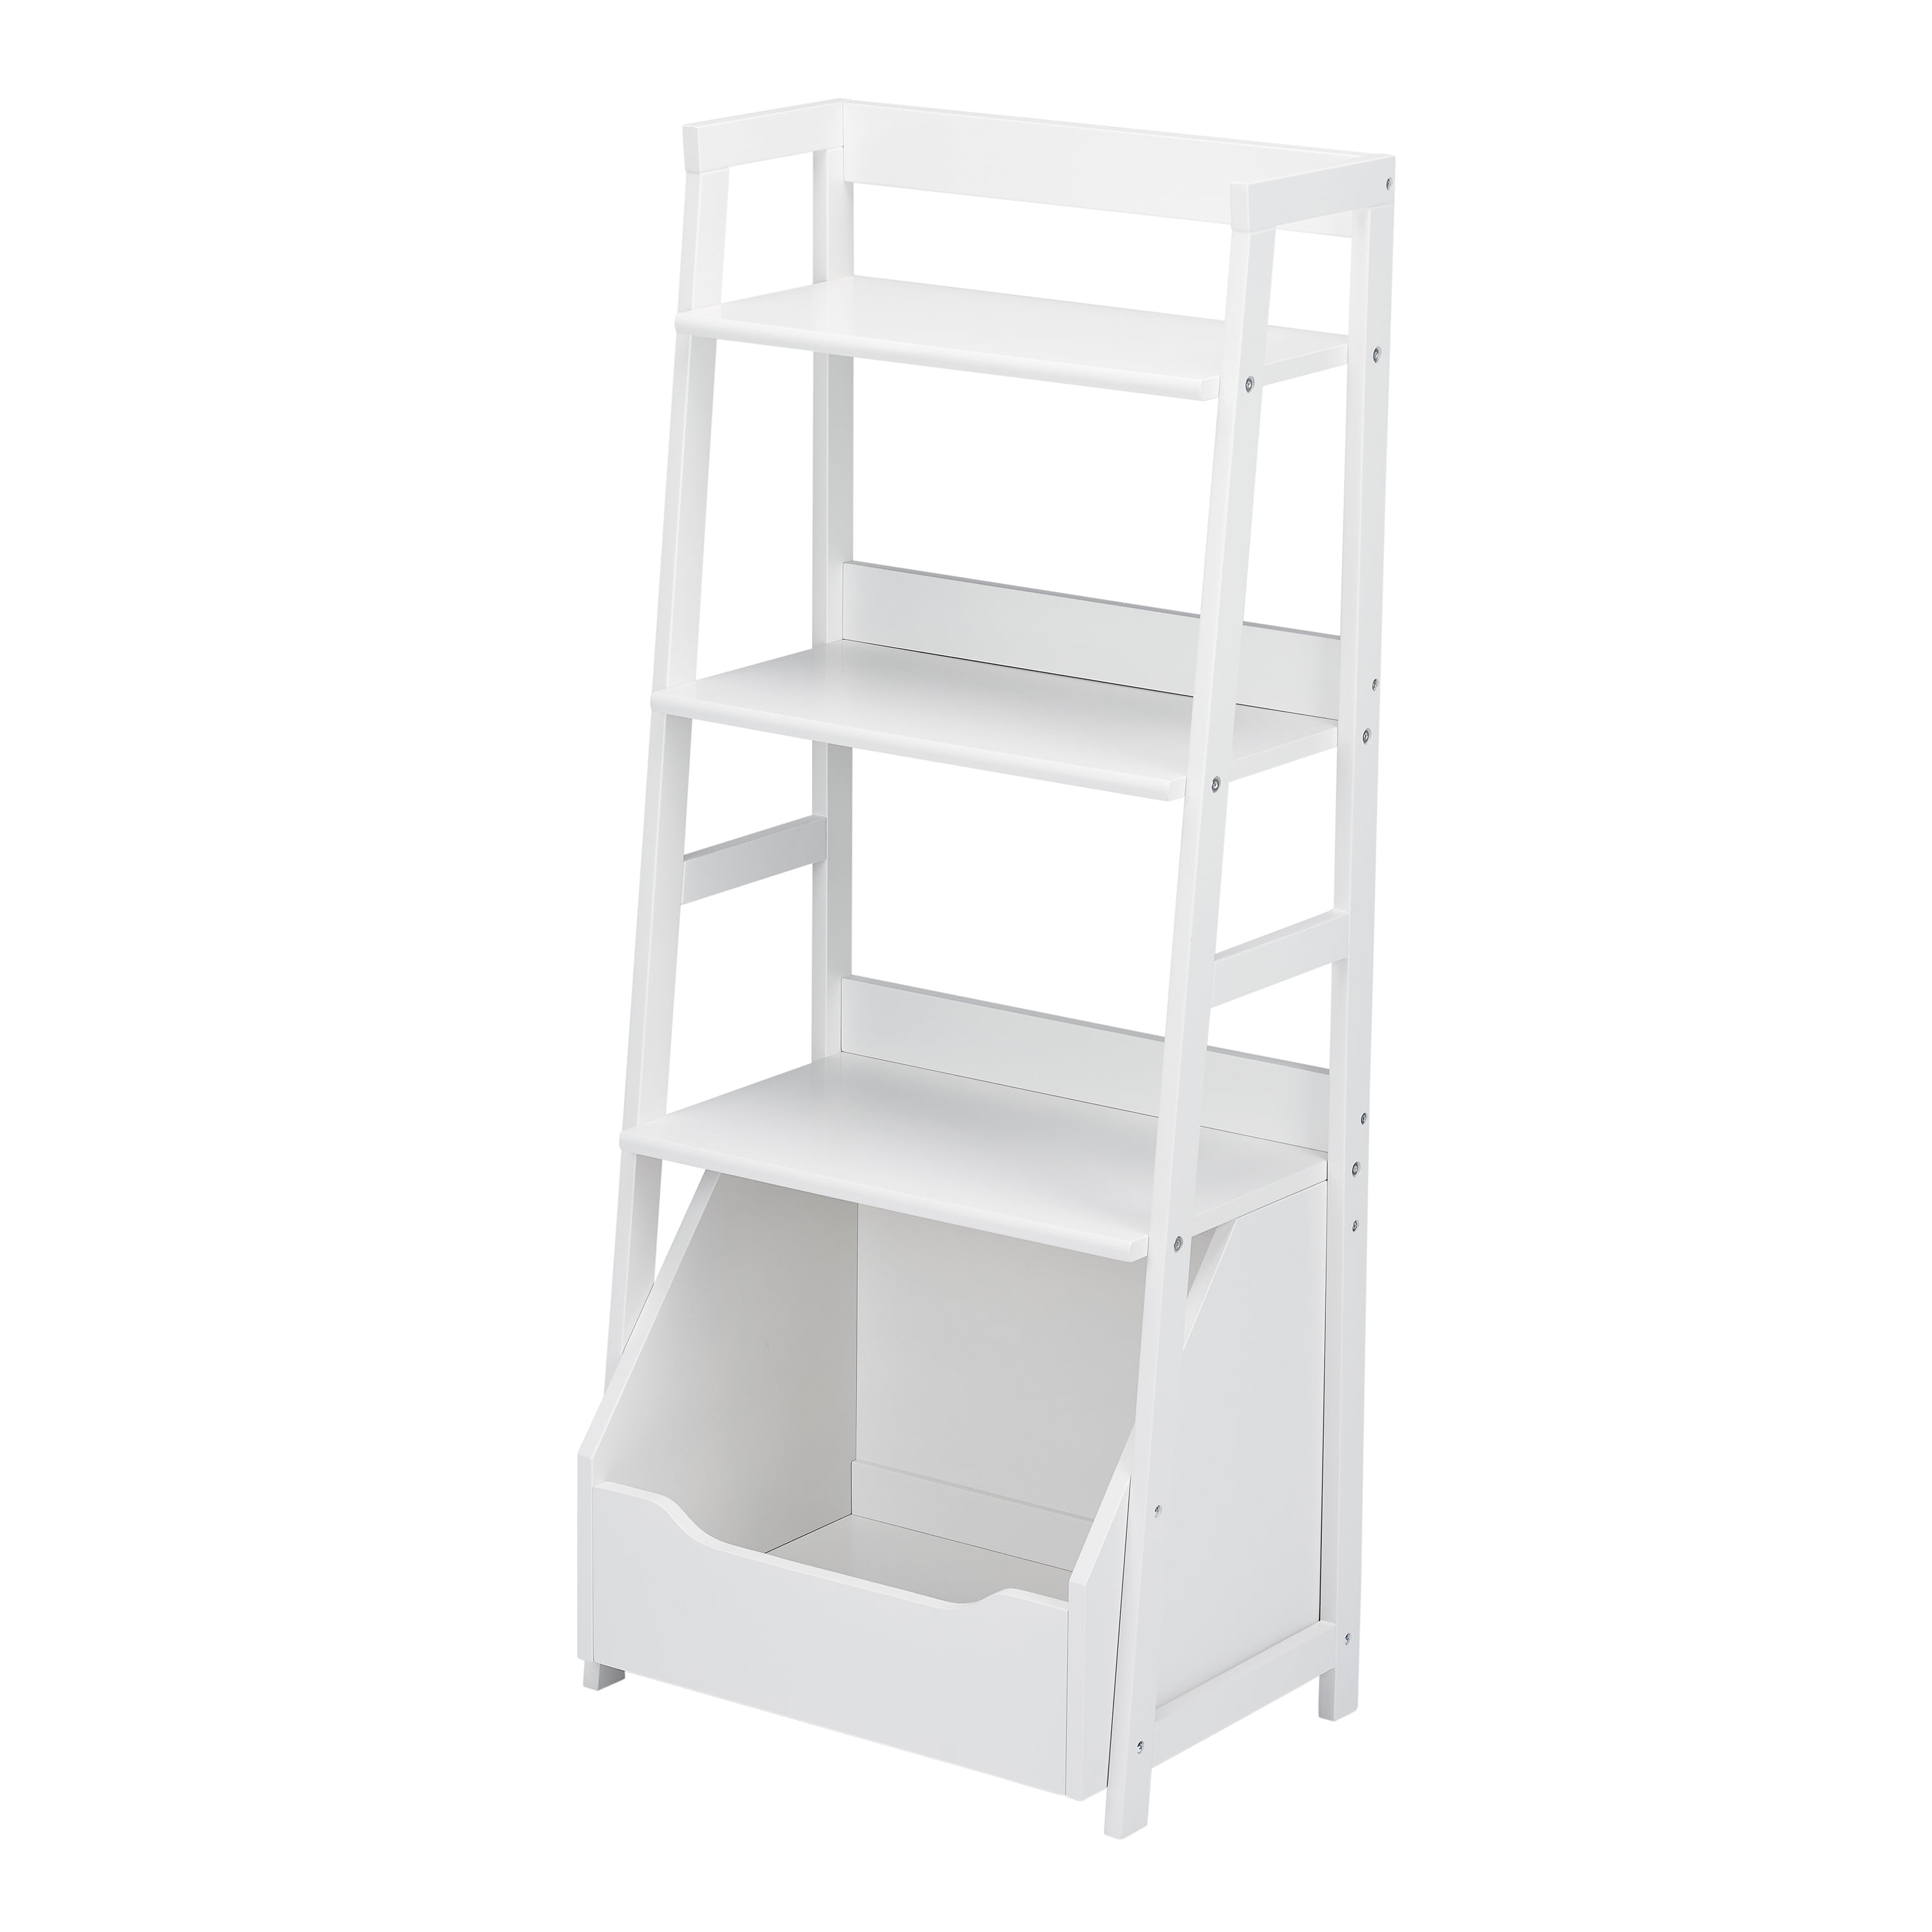 Your Zone White Painted Ladder Bookcase, Storage Bin Bookcase